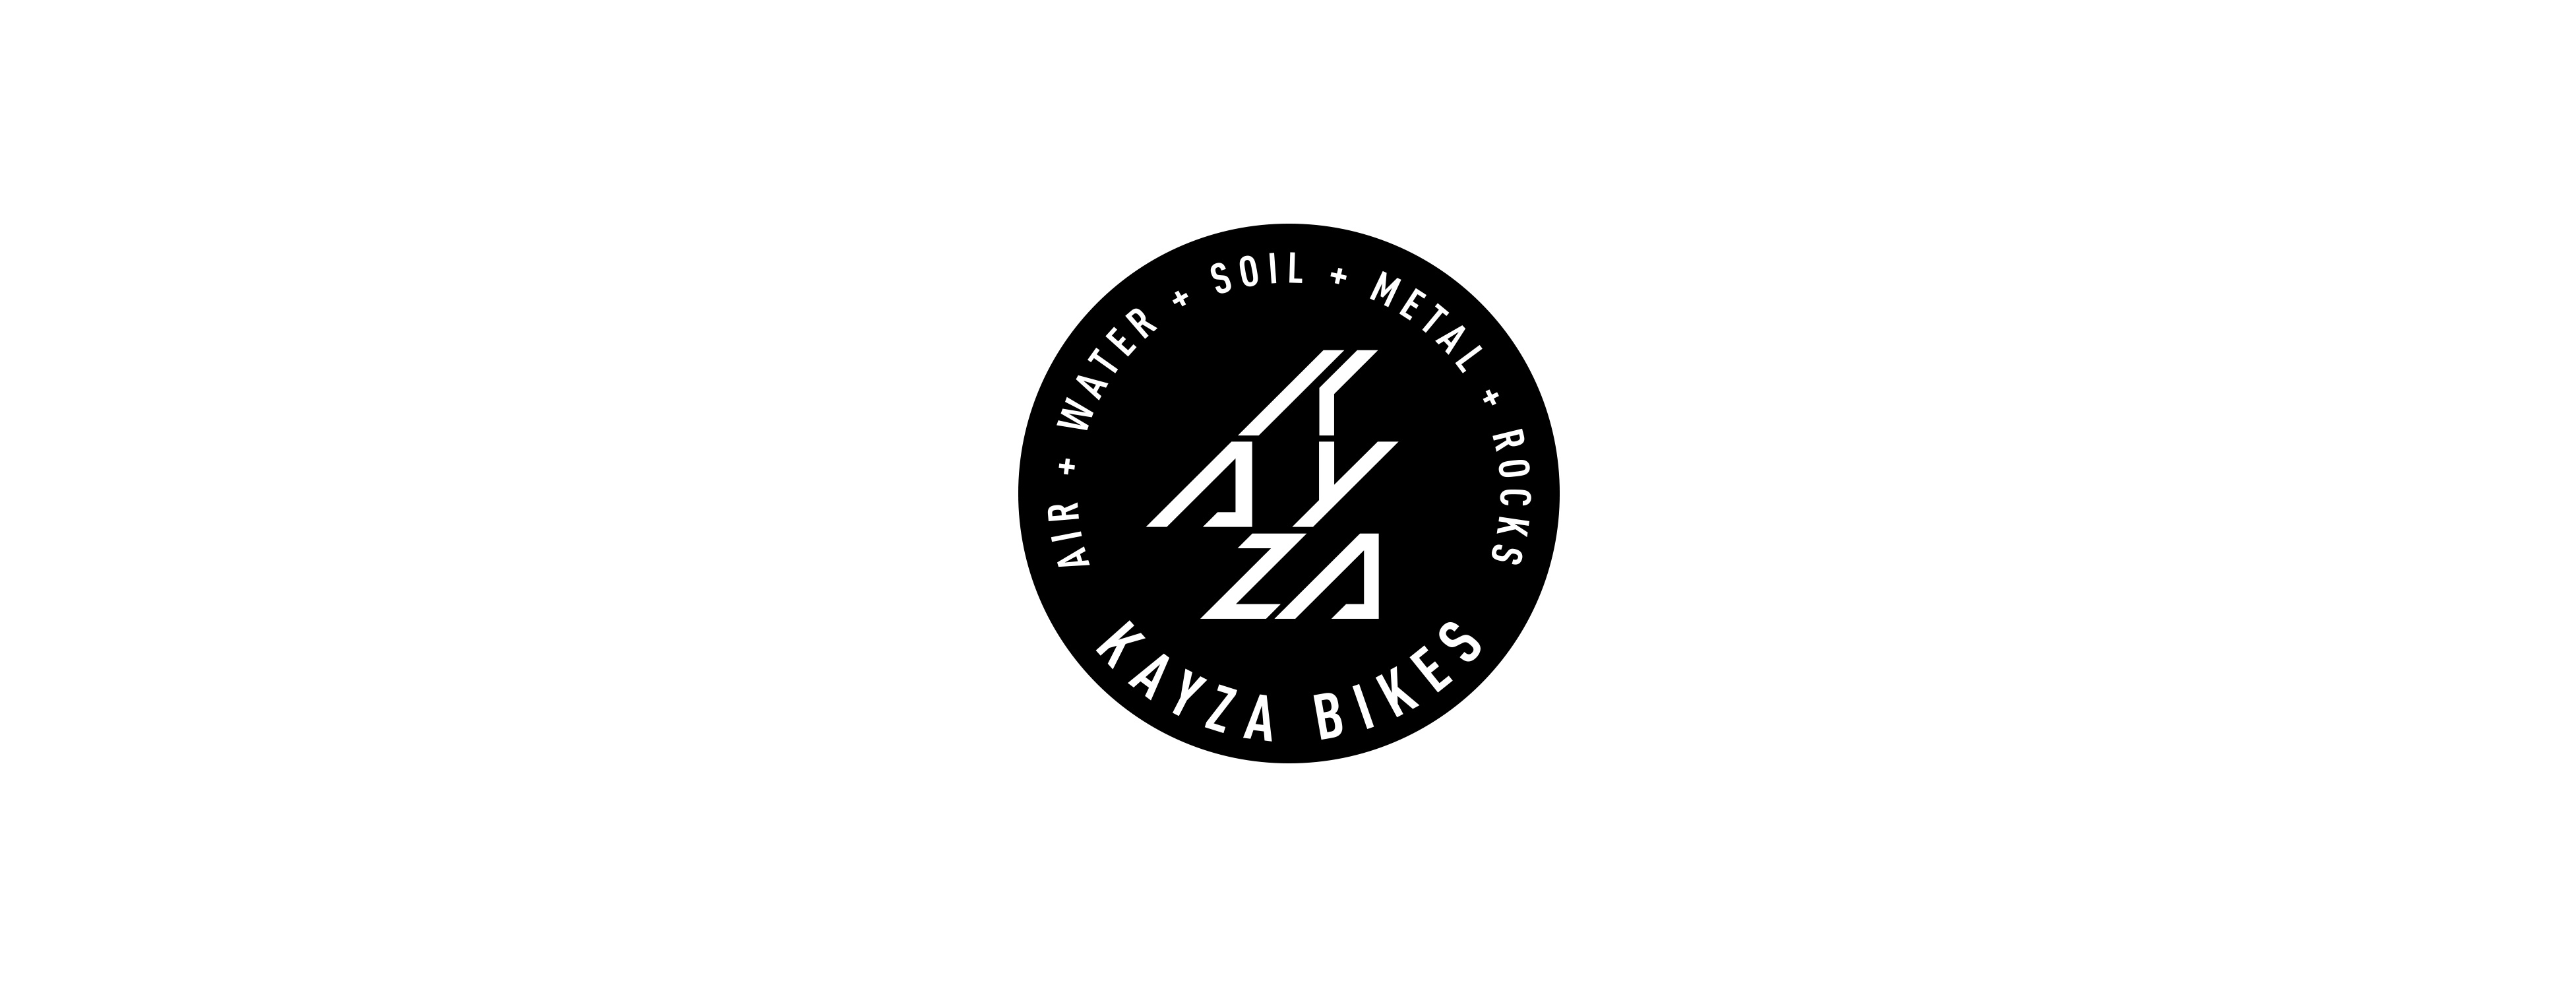 Kayza Bikes - Visuelle Identitaet - Kataloggestaltung